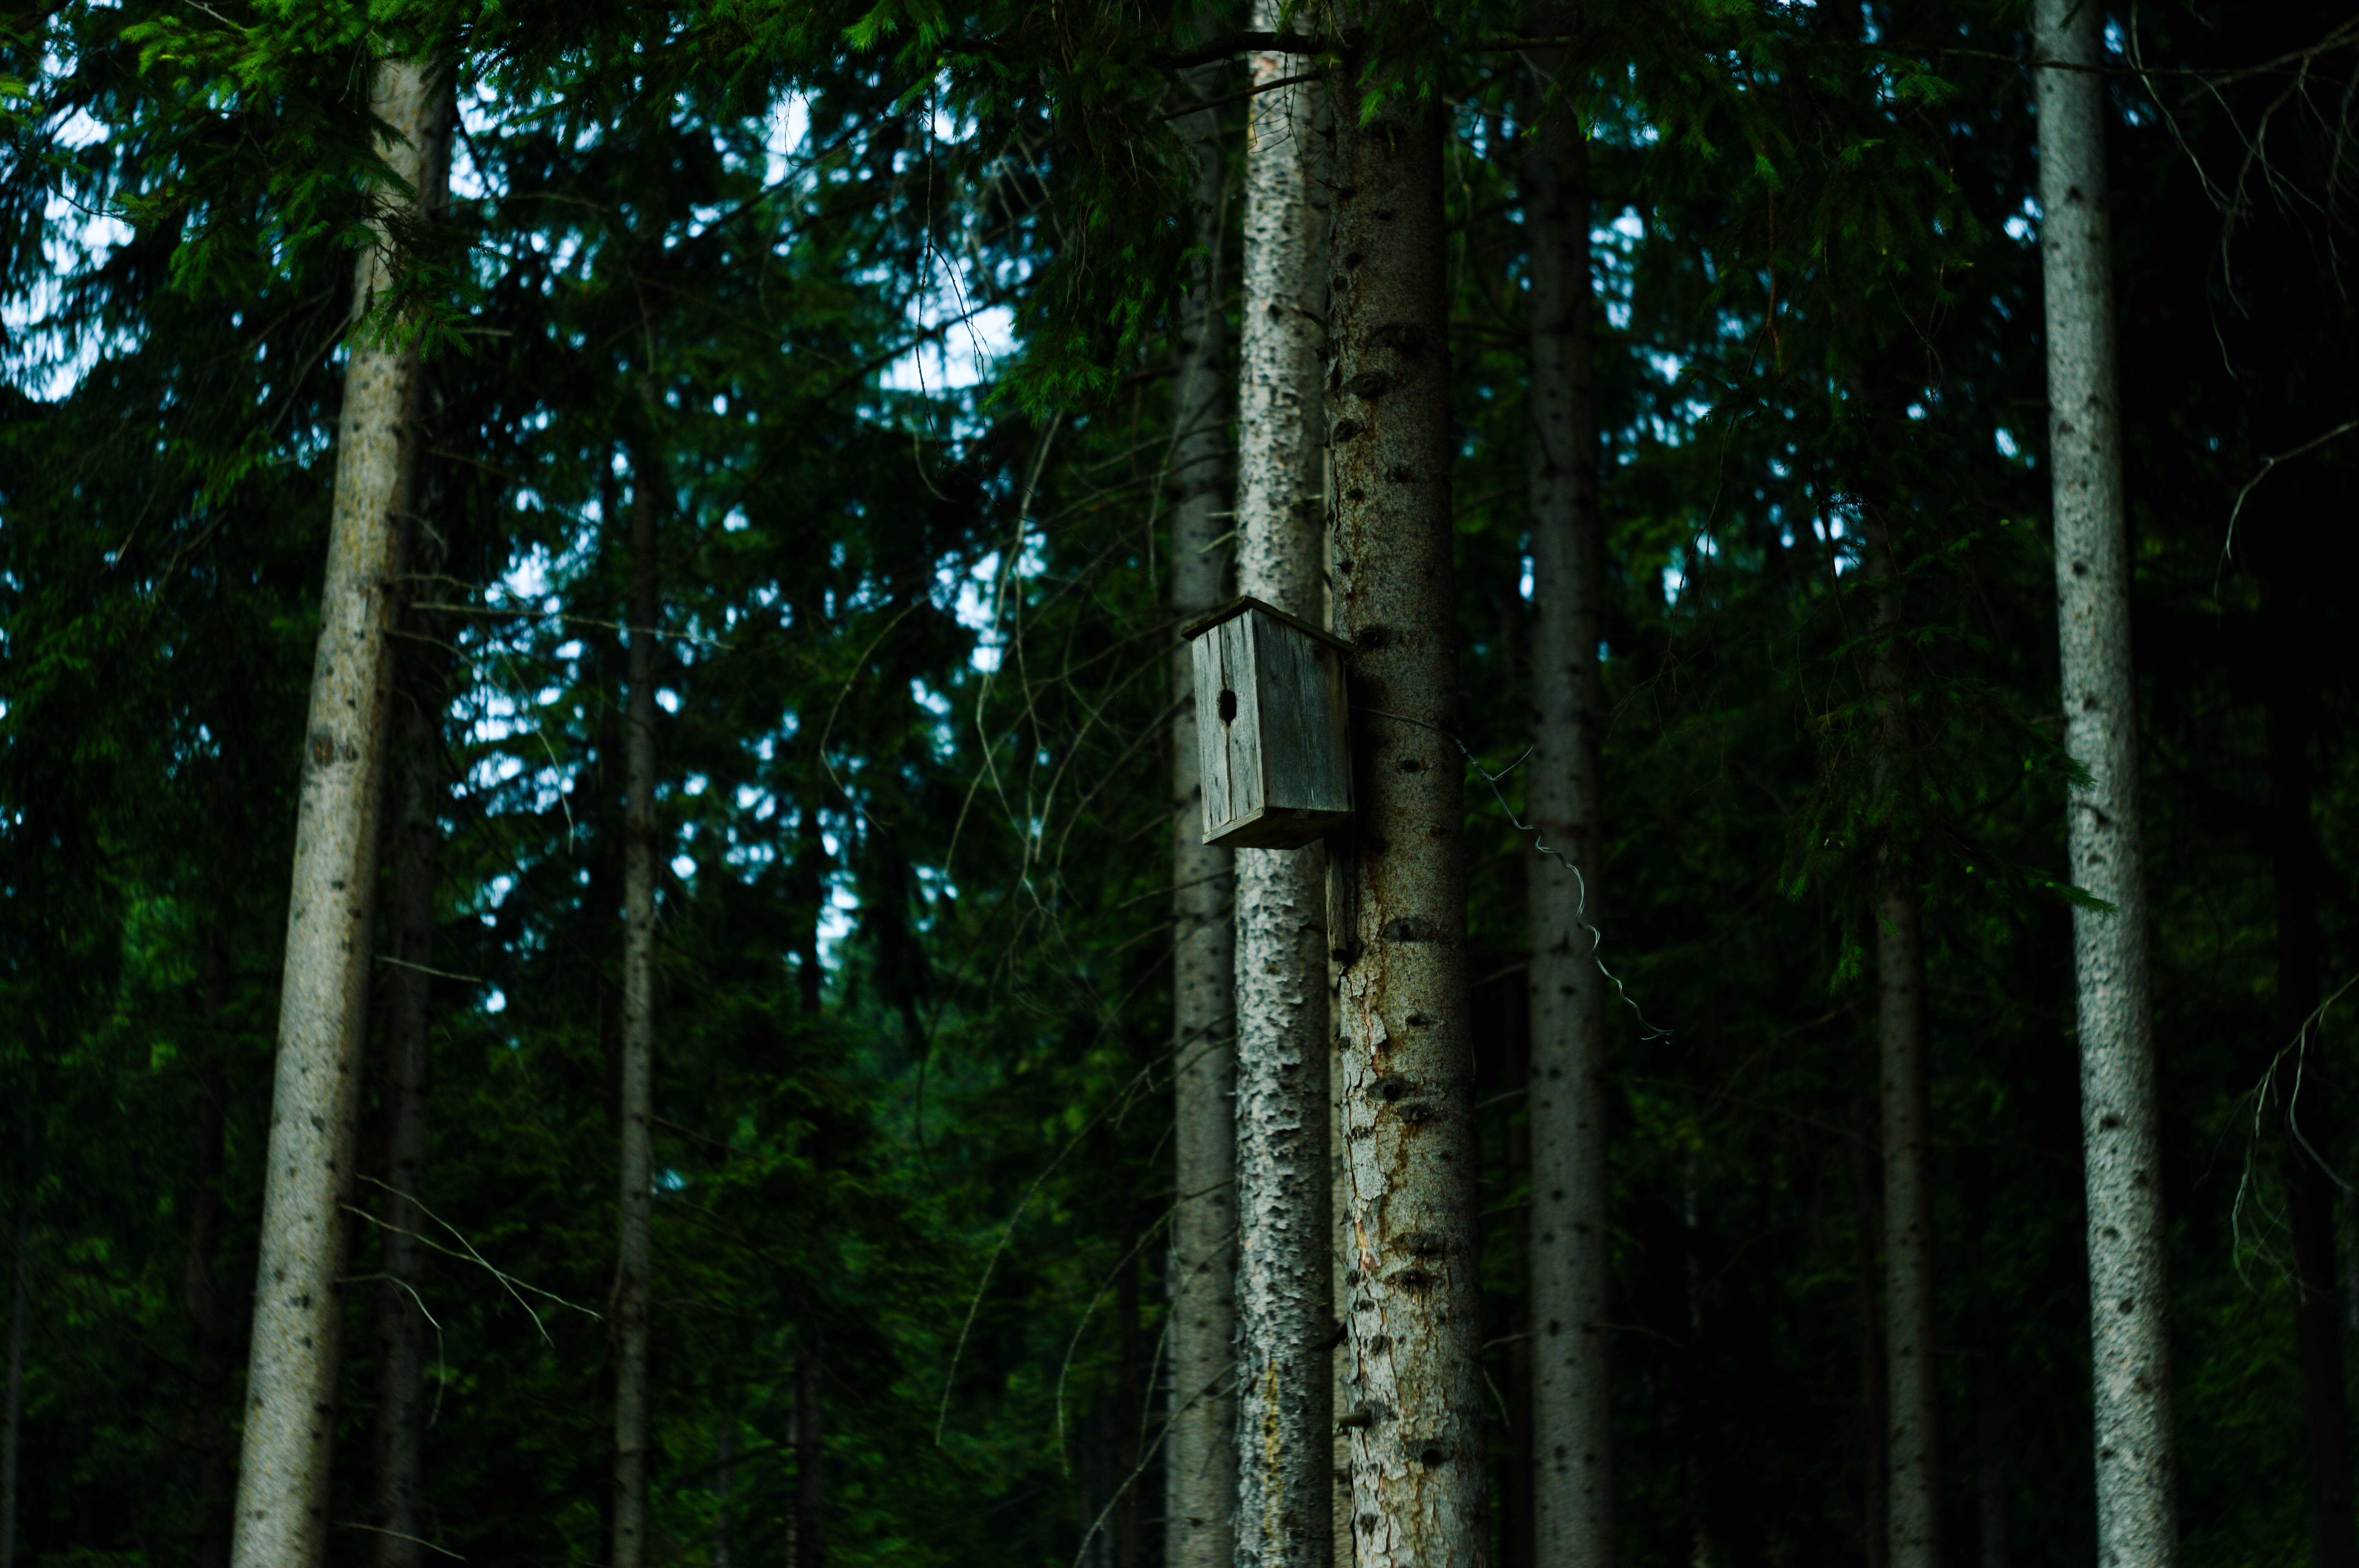 118857 descargar imagen naturaleza, madera, bosque, árbol, pajarera: fondos de pantalla y protectores de pantalla gratis